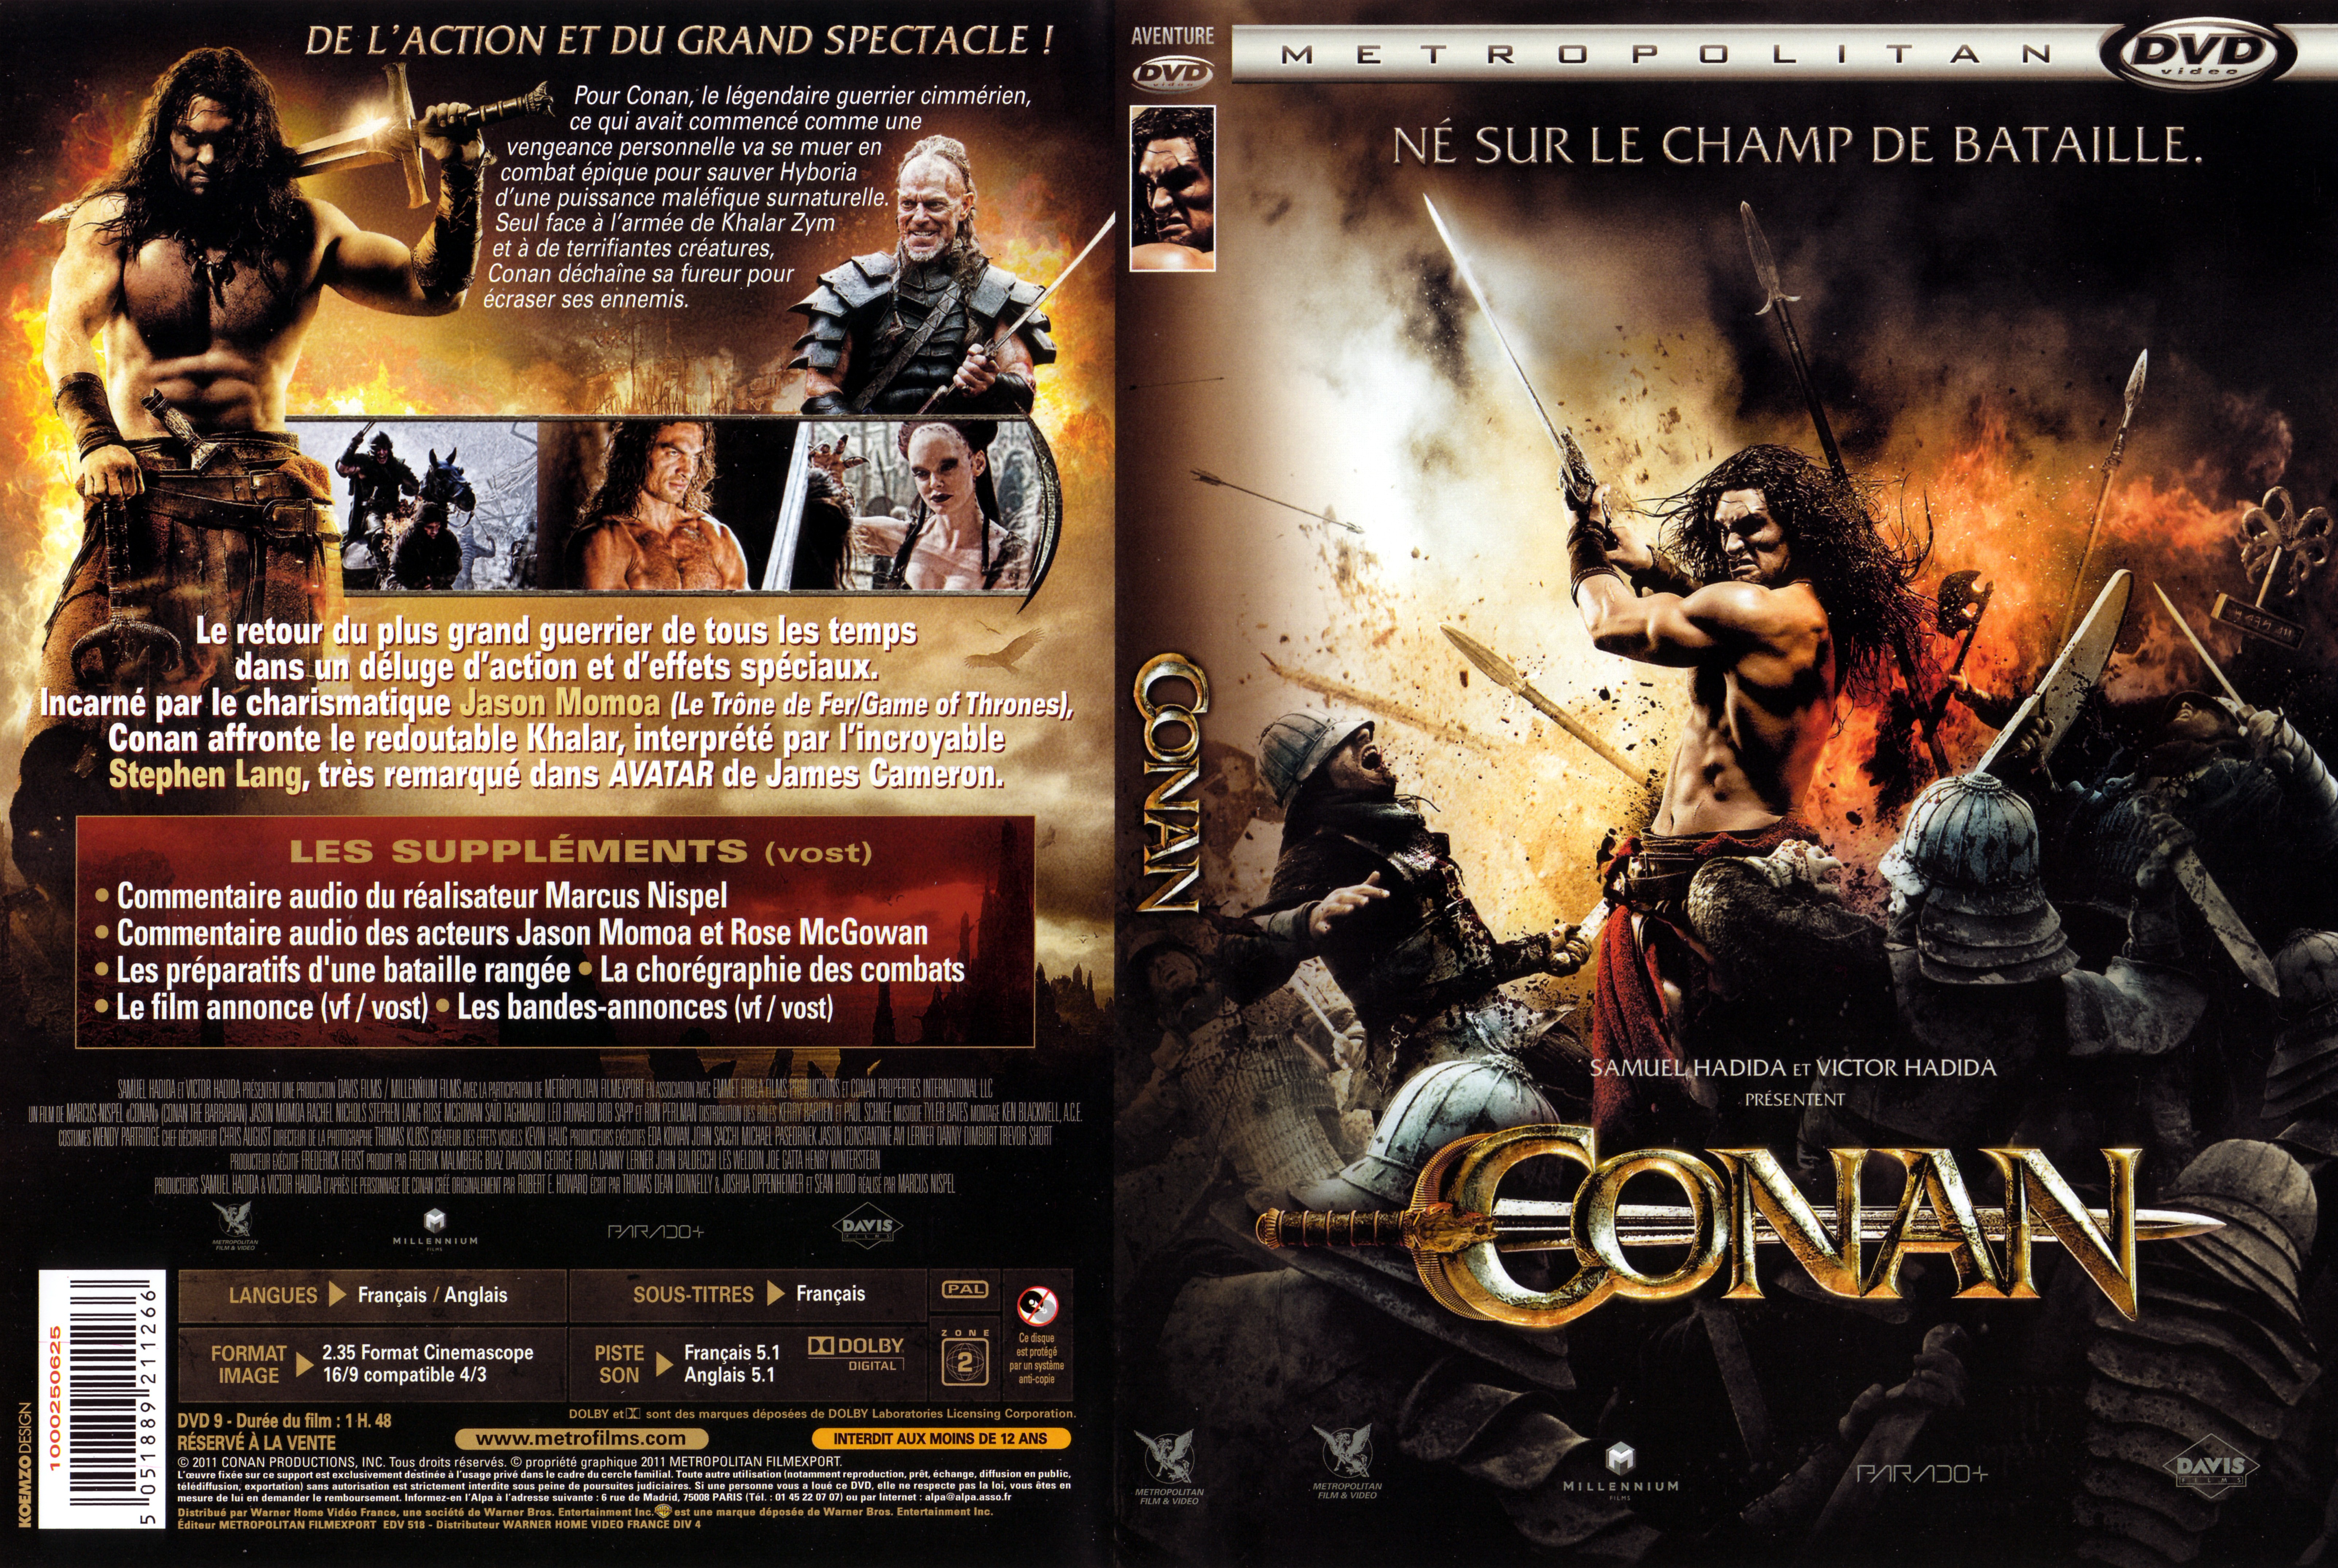 Jaquette DVD Conan